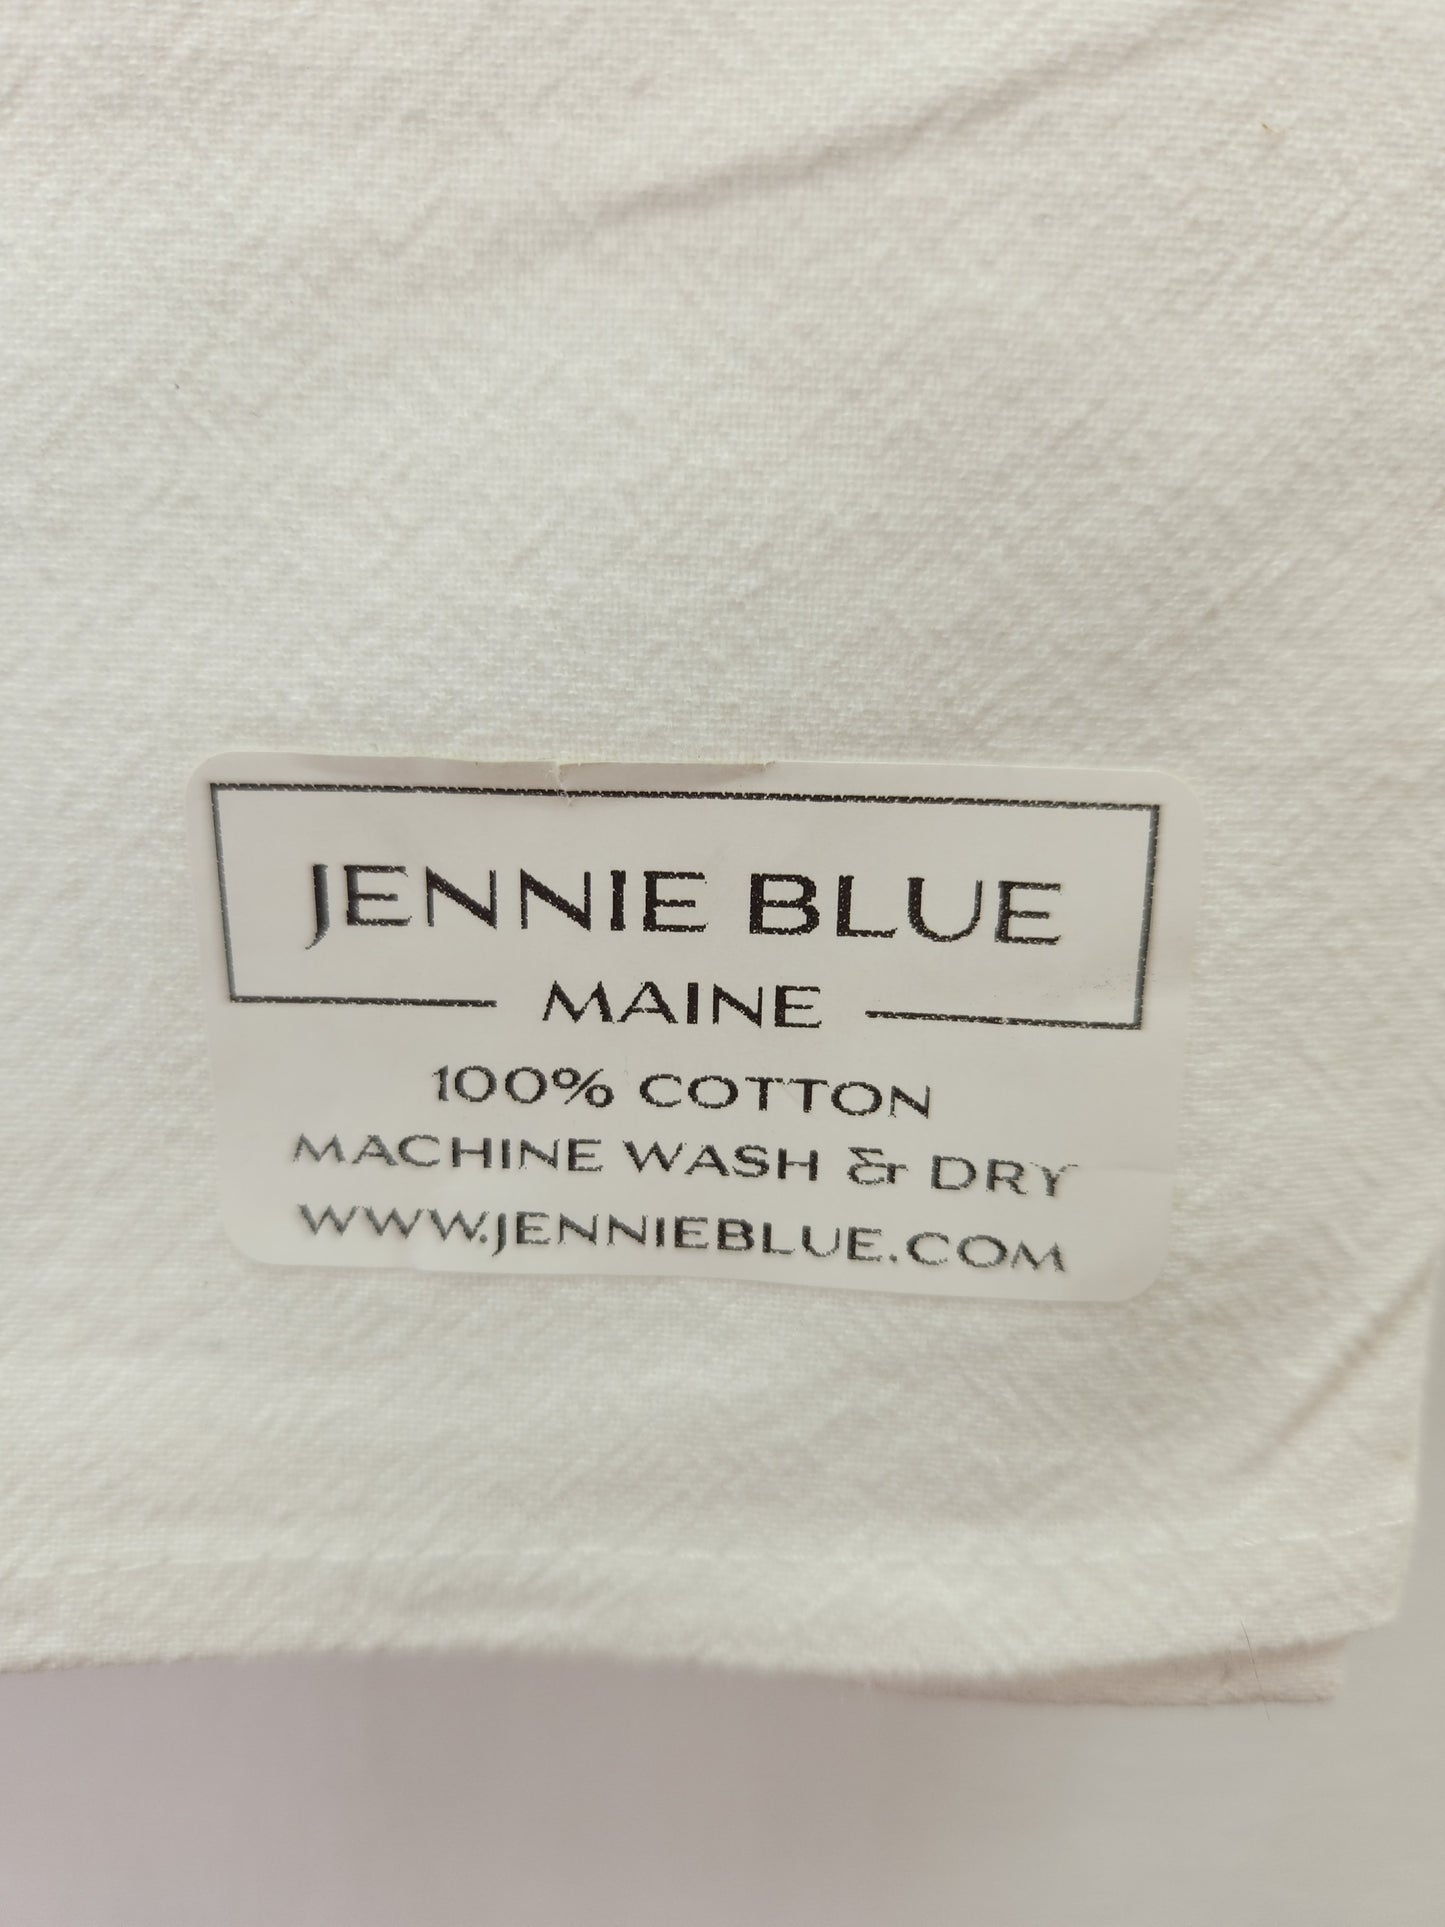 NEW - Amanda Gorman Flour Sack Towel by Jennie Blue